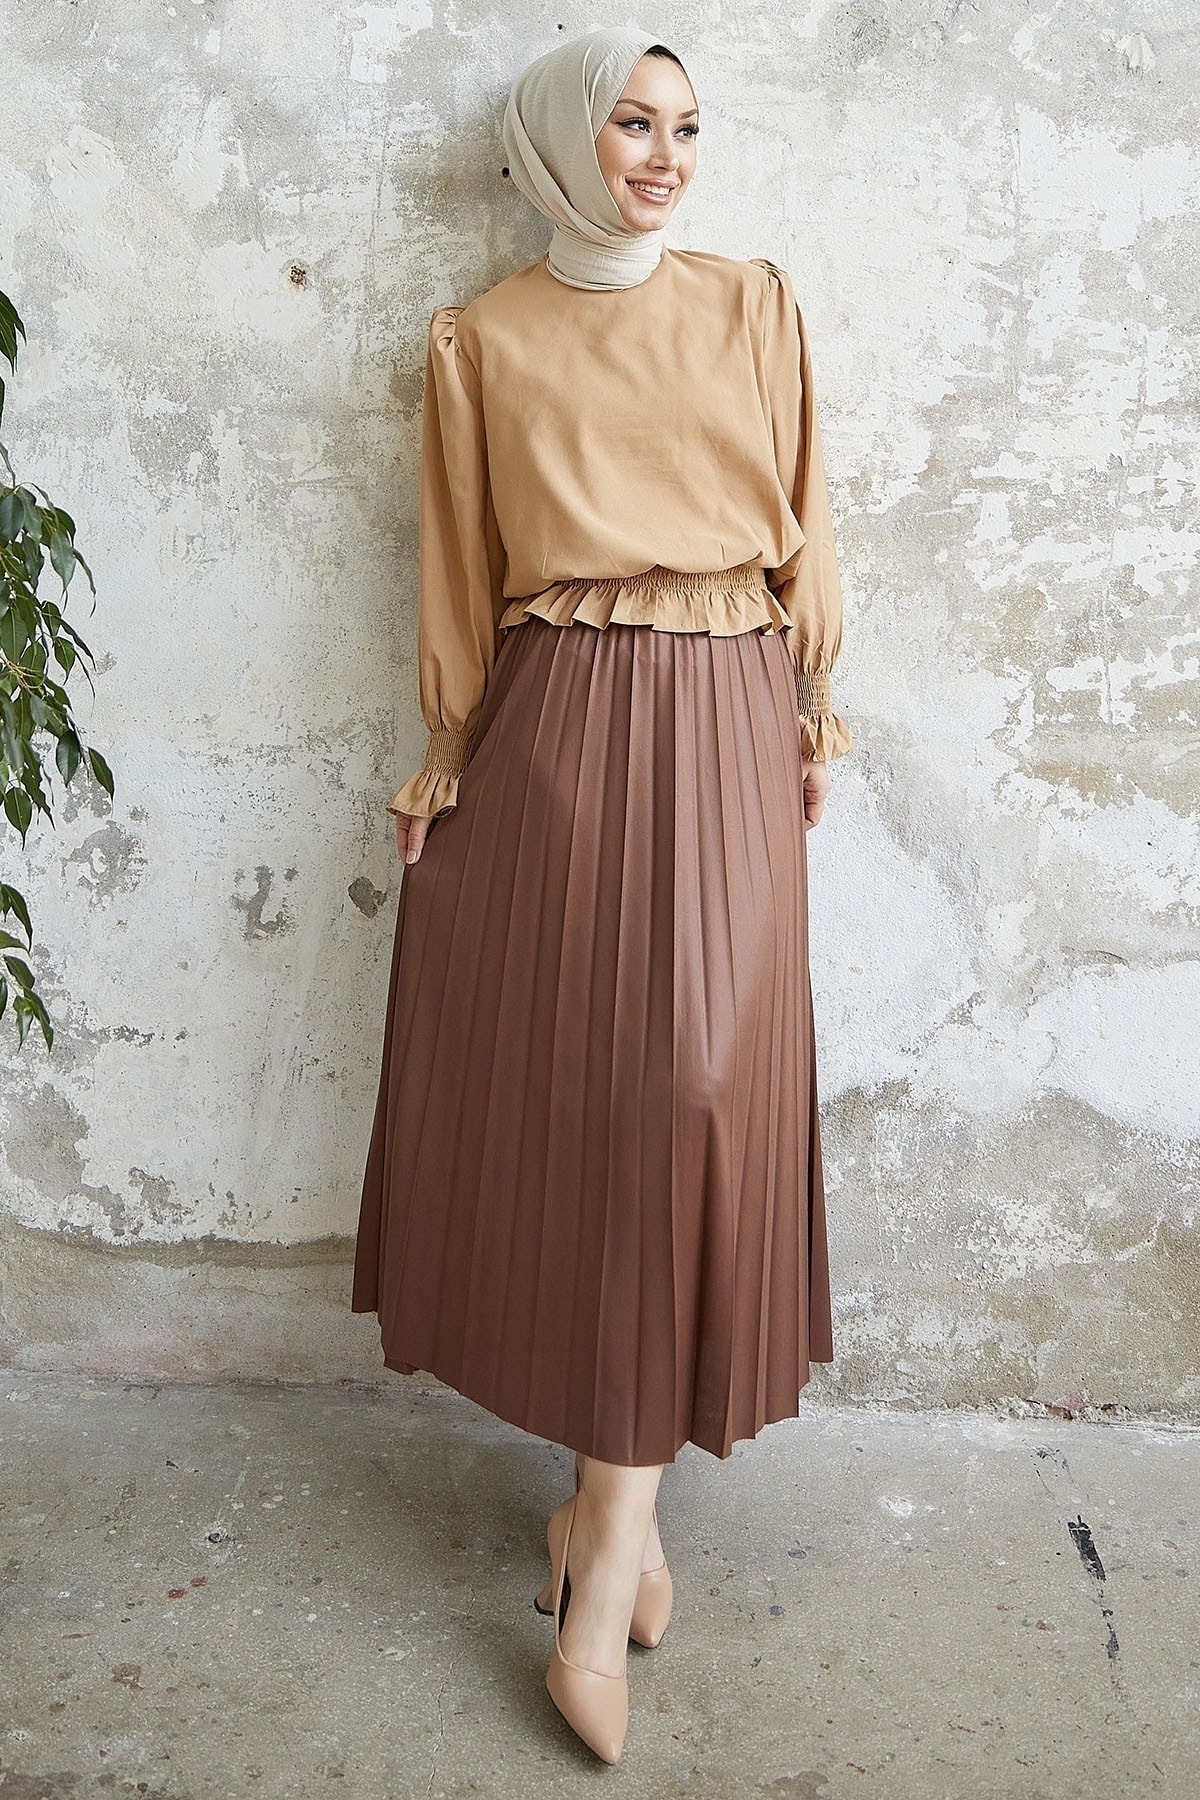 InStyle Alfea Leather Look Skirt - Dark Brown